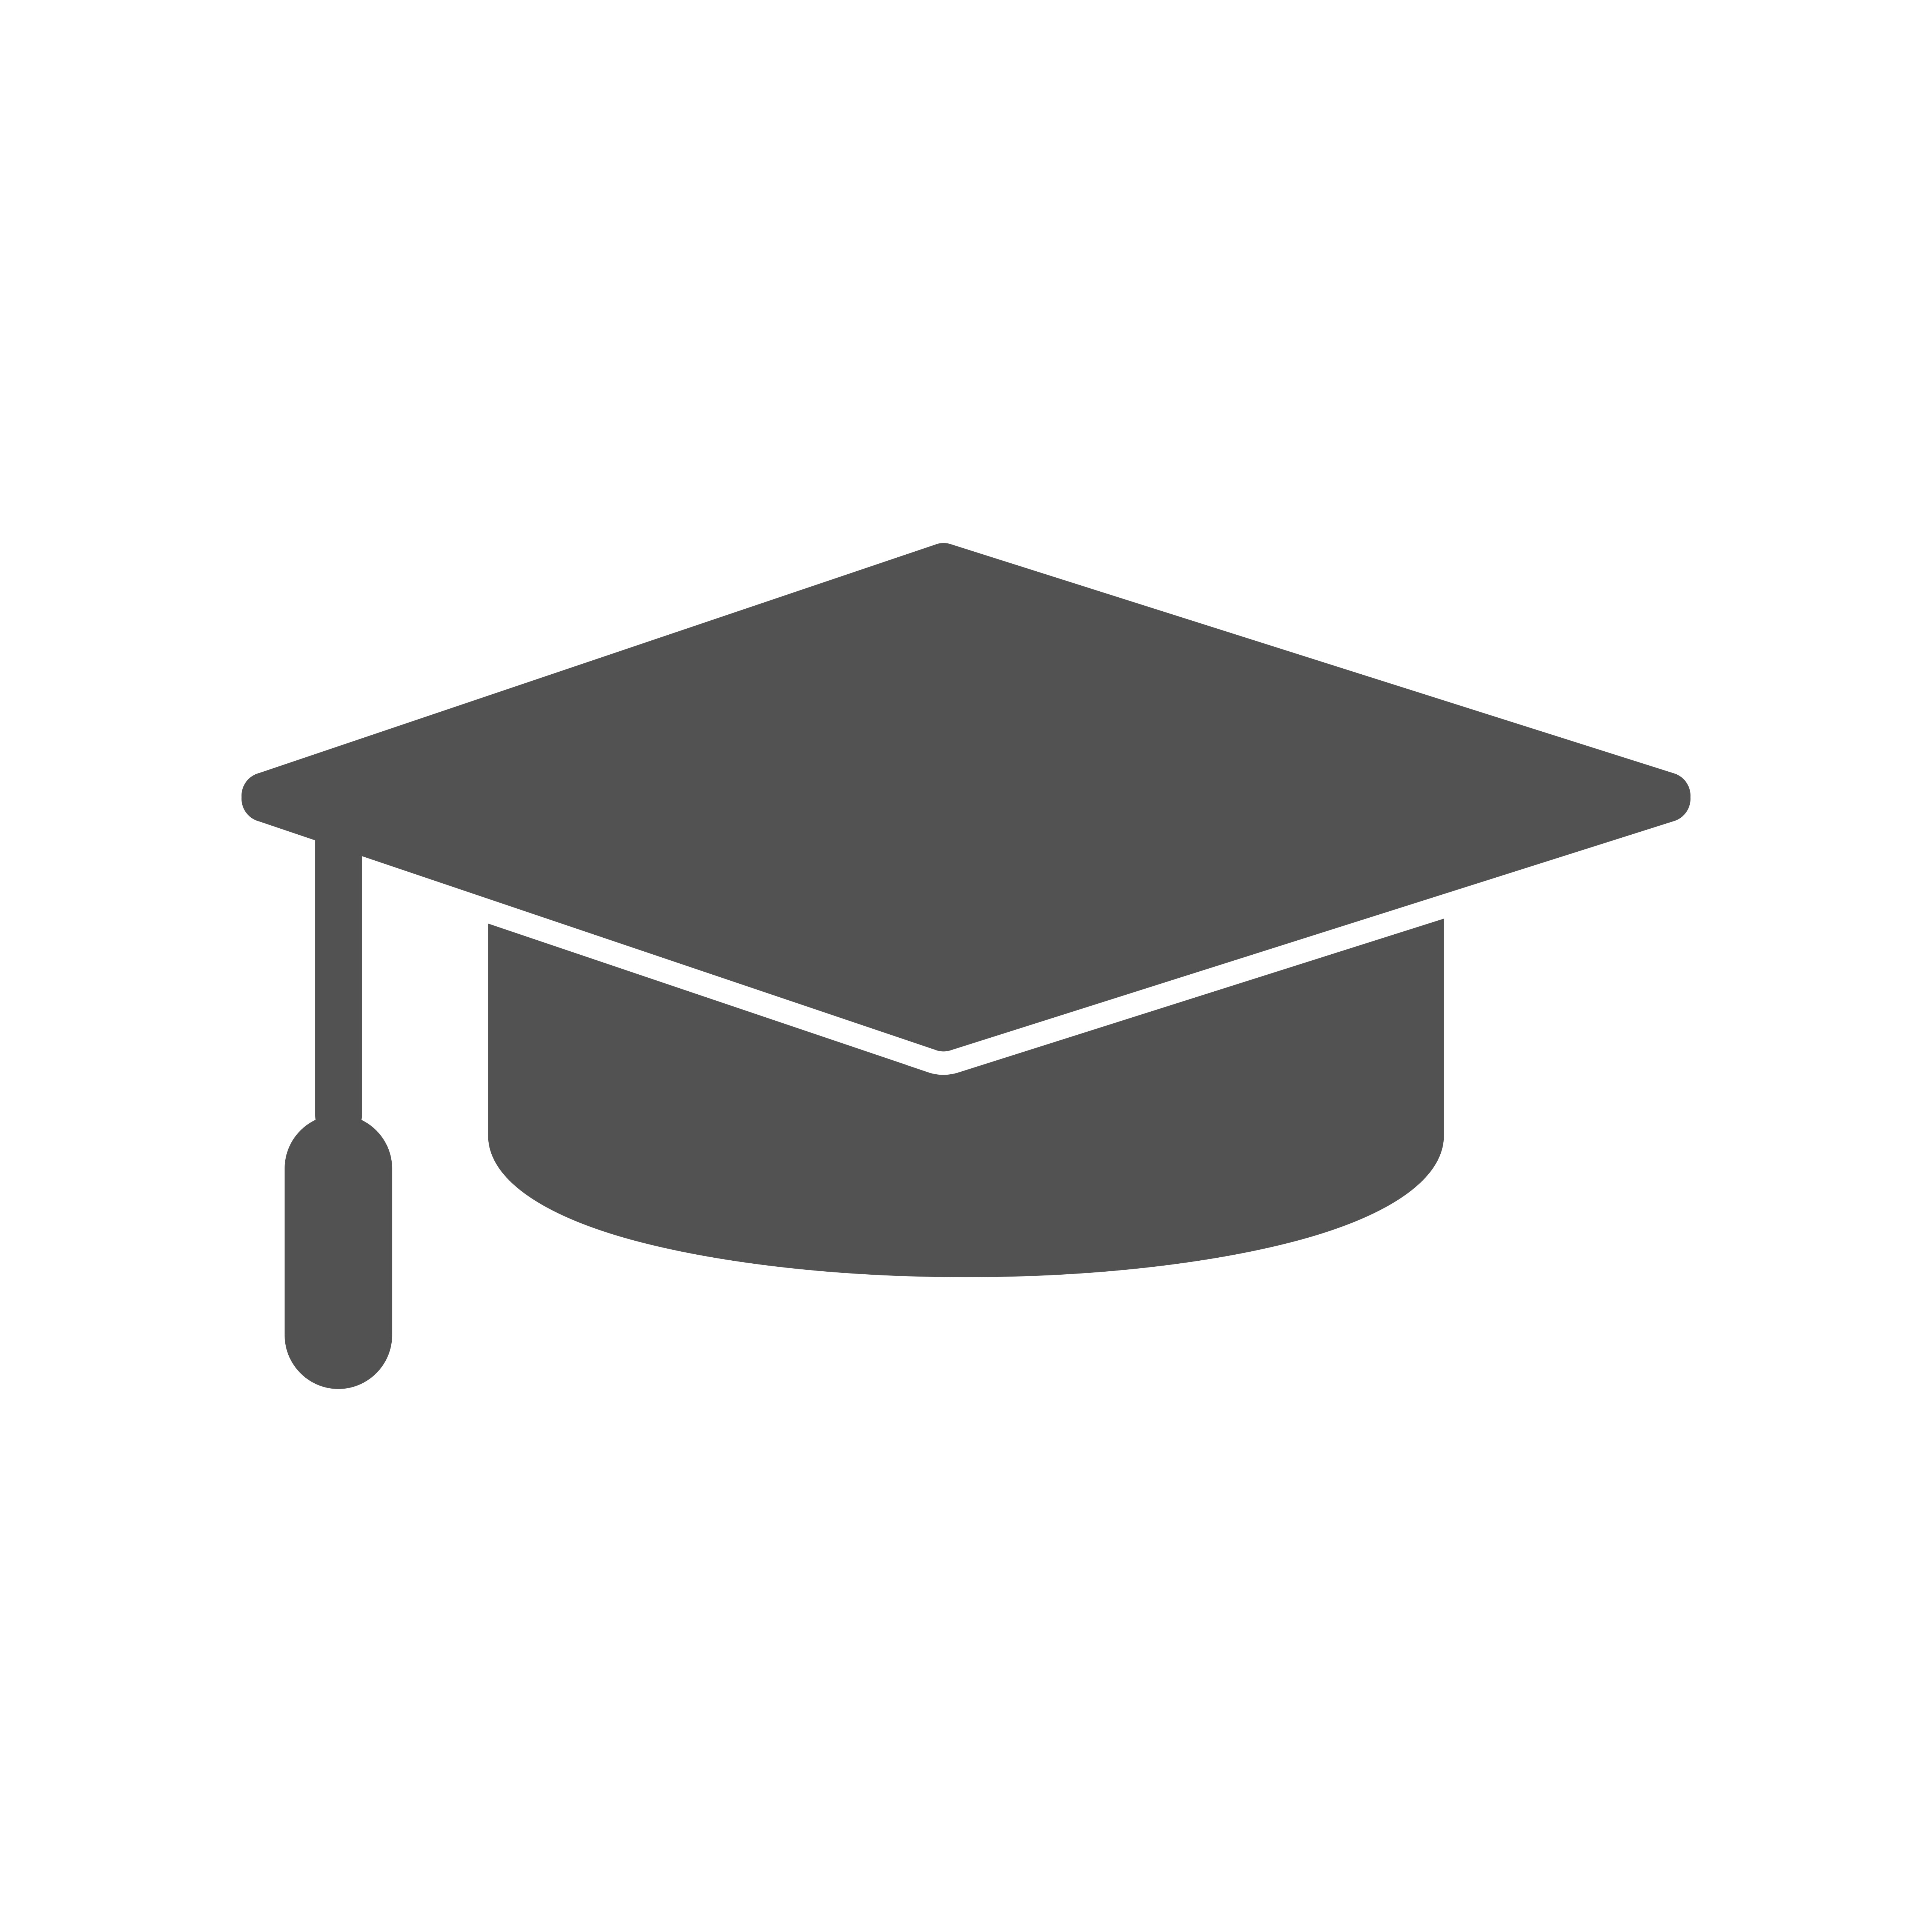 Graduation Hat Graduation Cap Icon Free Download And Vector Clipart